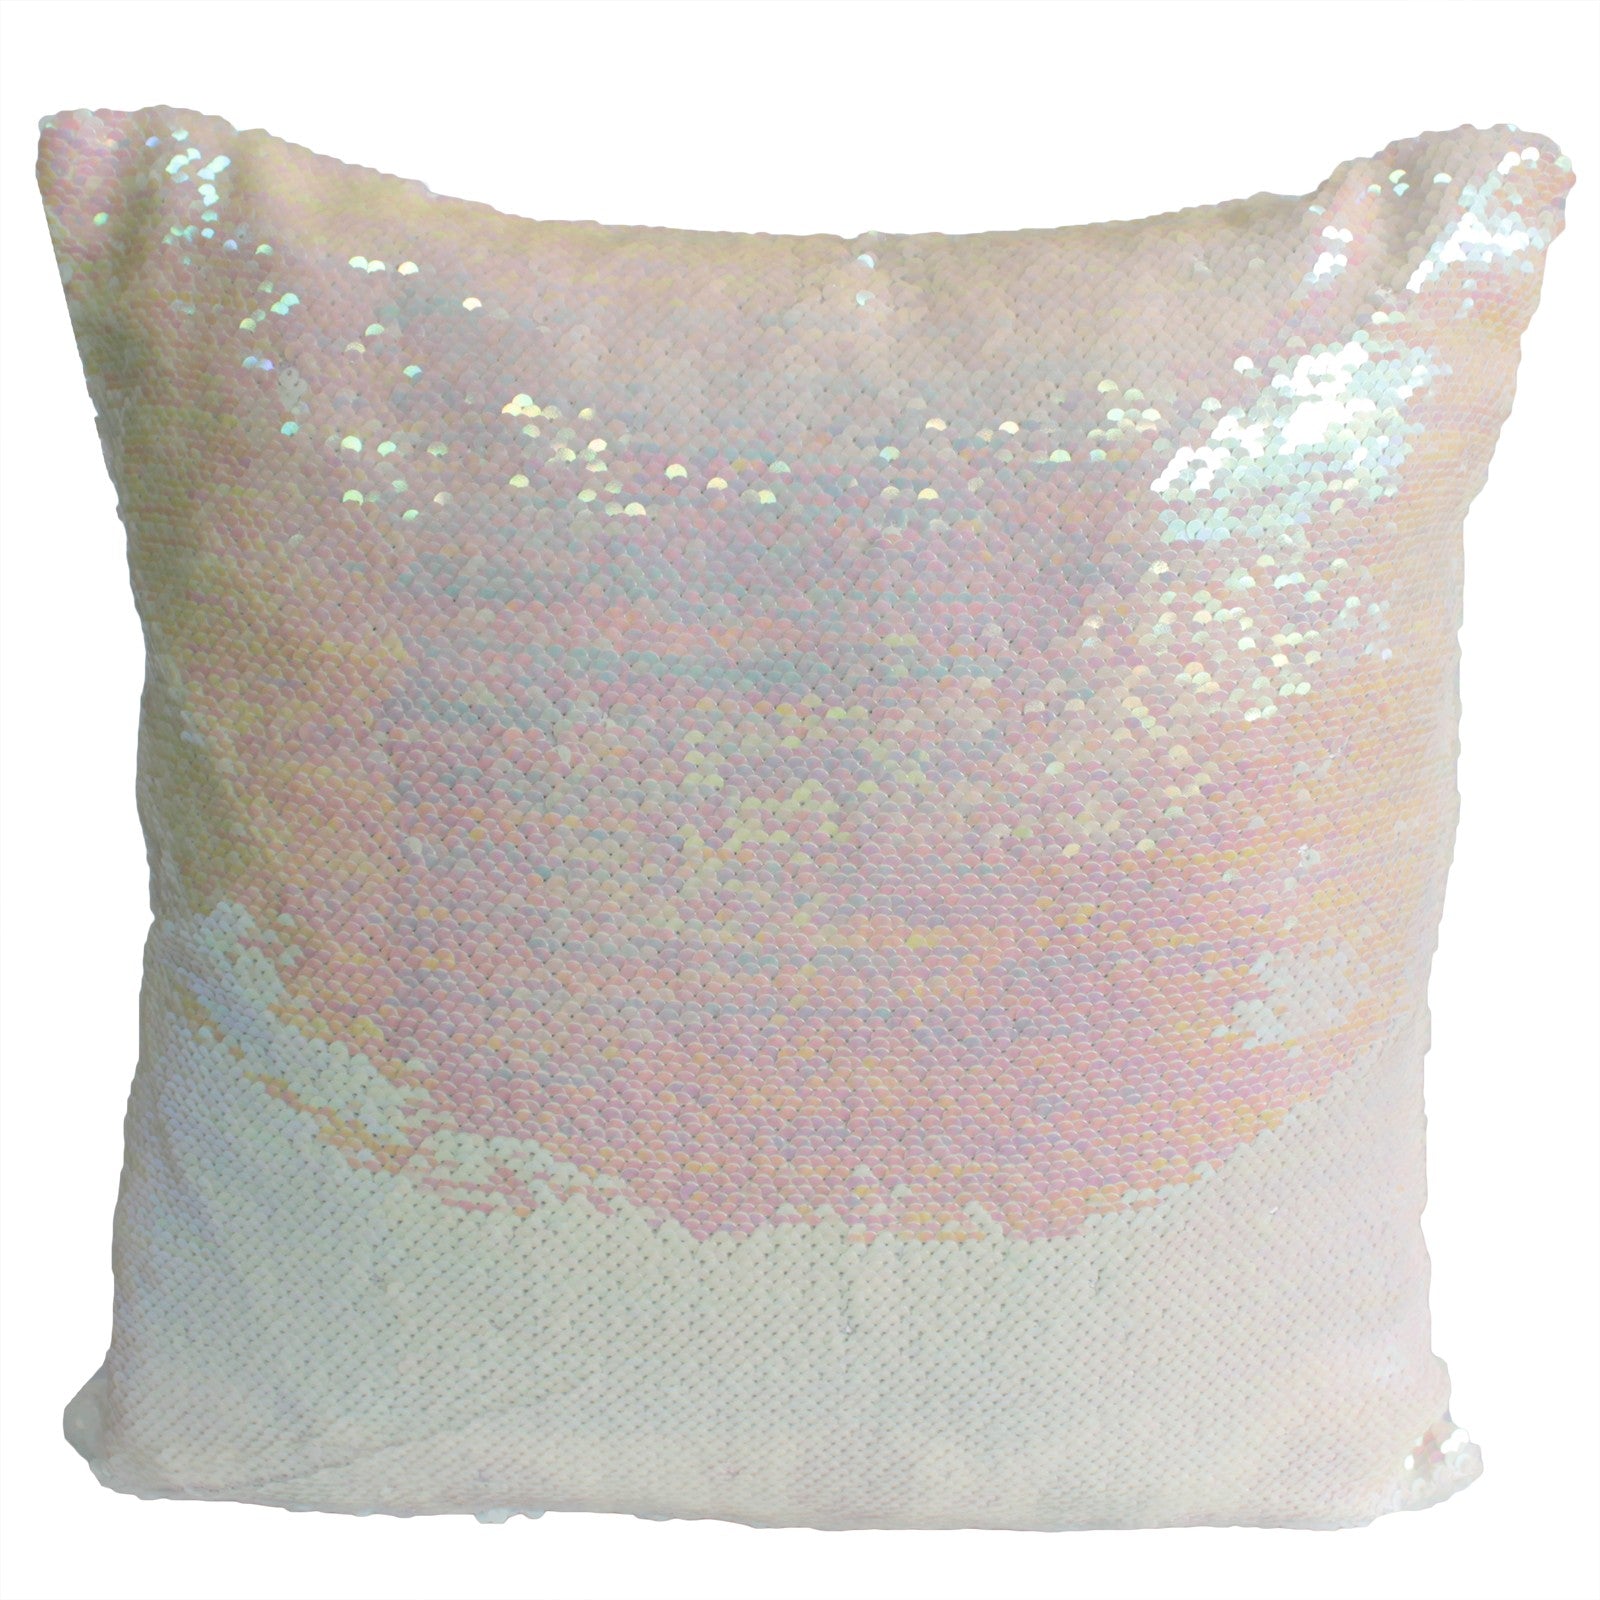 View Mermaid Cushions Pink Snow information